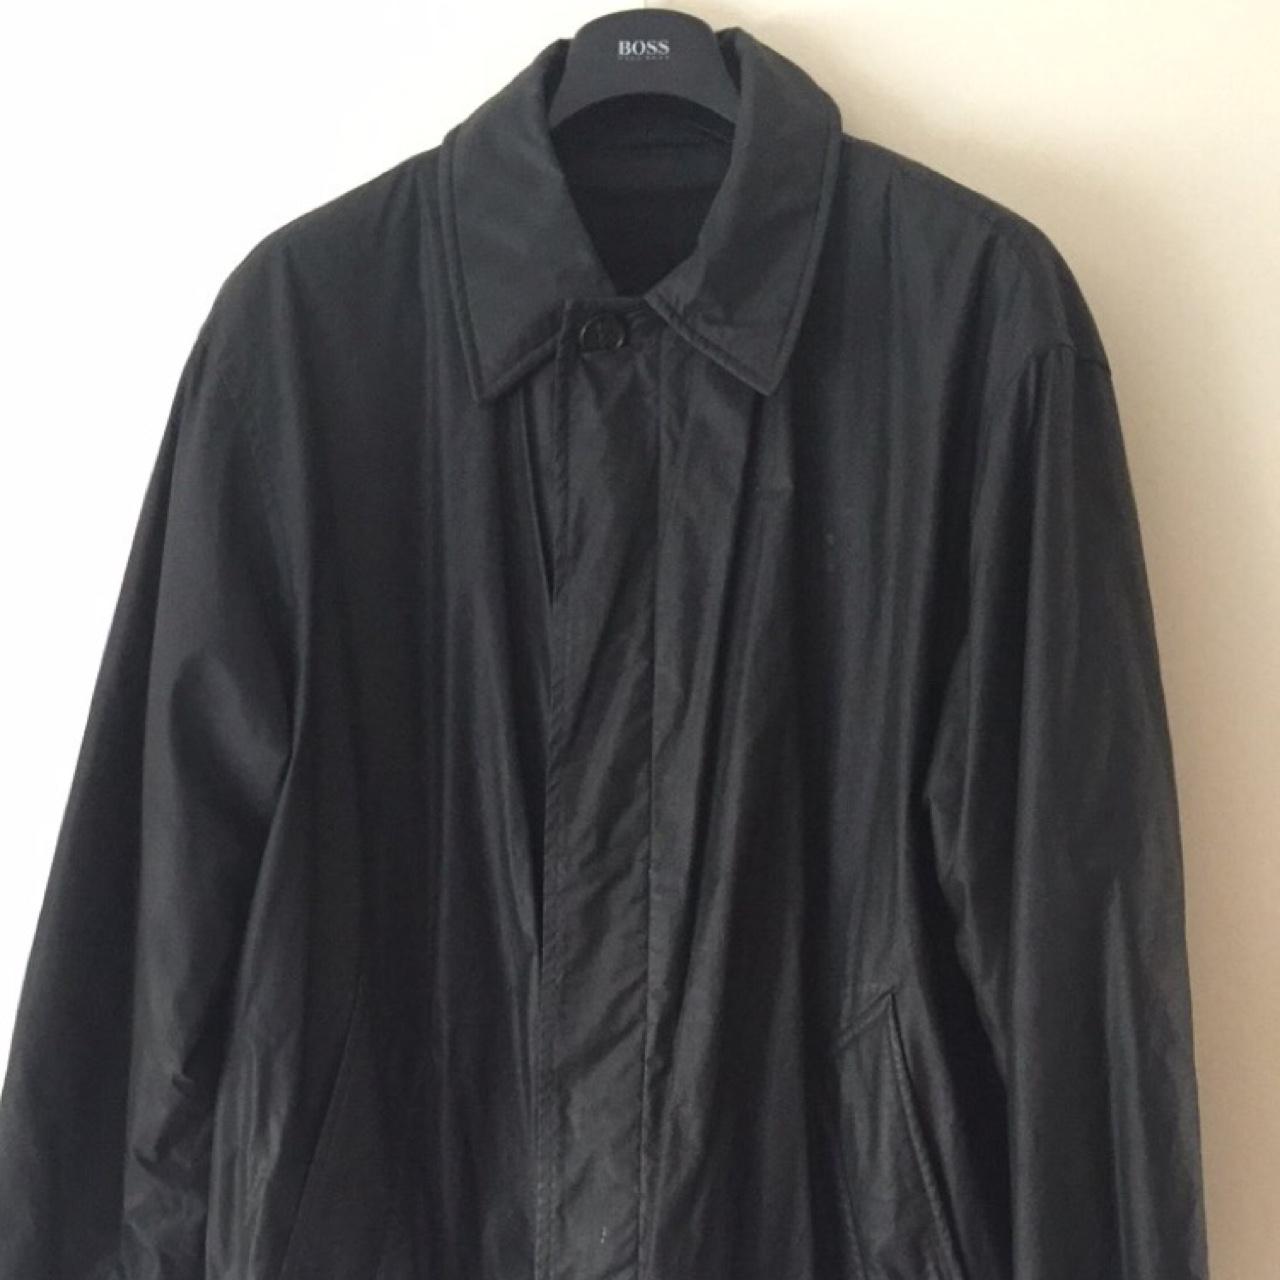 Black Hugo Boss raincoat with thick detachable coat... - Depop